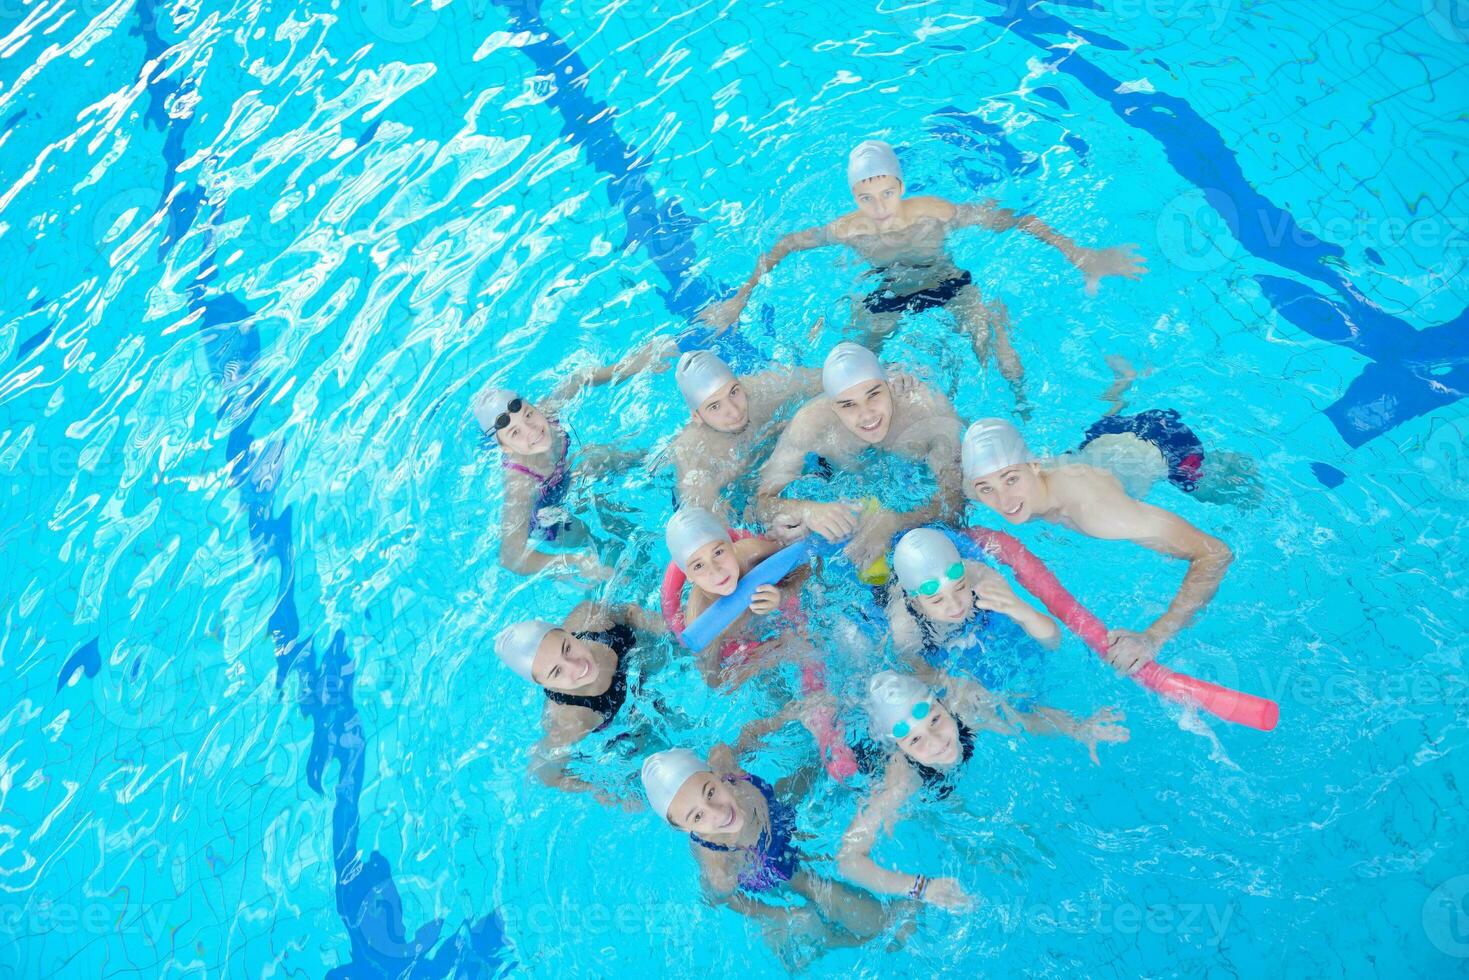 Kindergruppe im Schwimmbad foto